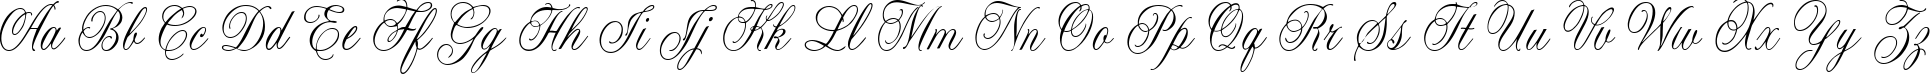 Пример написания английского алфавита шрифтом Lastochka